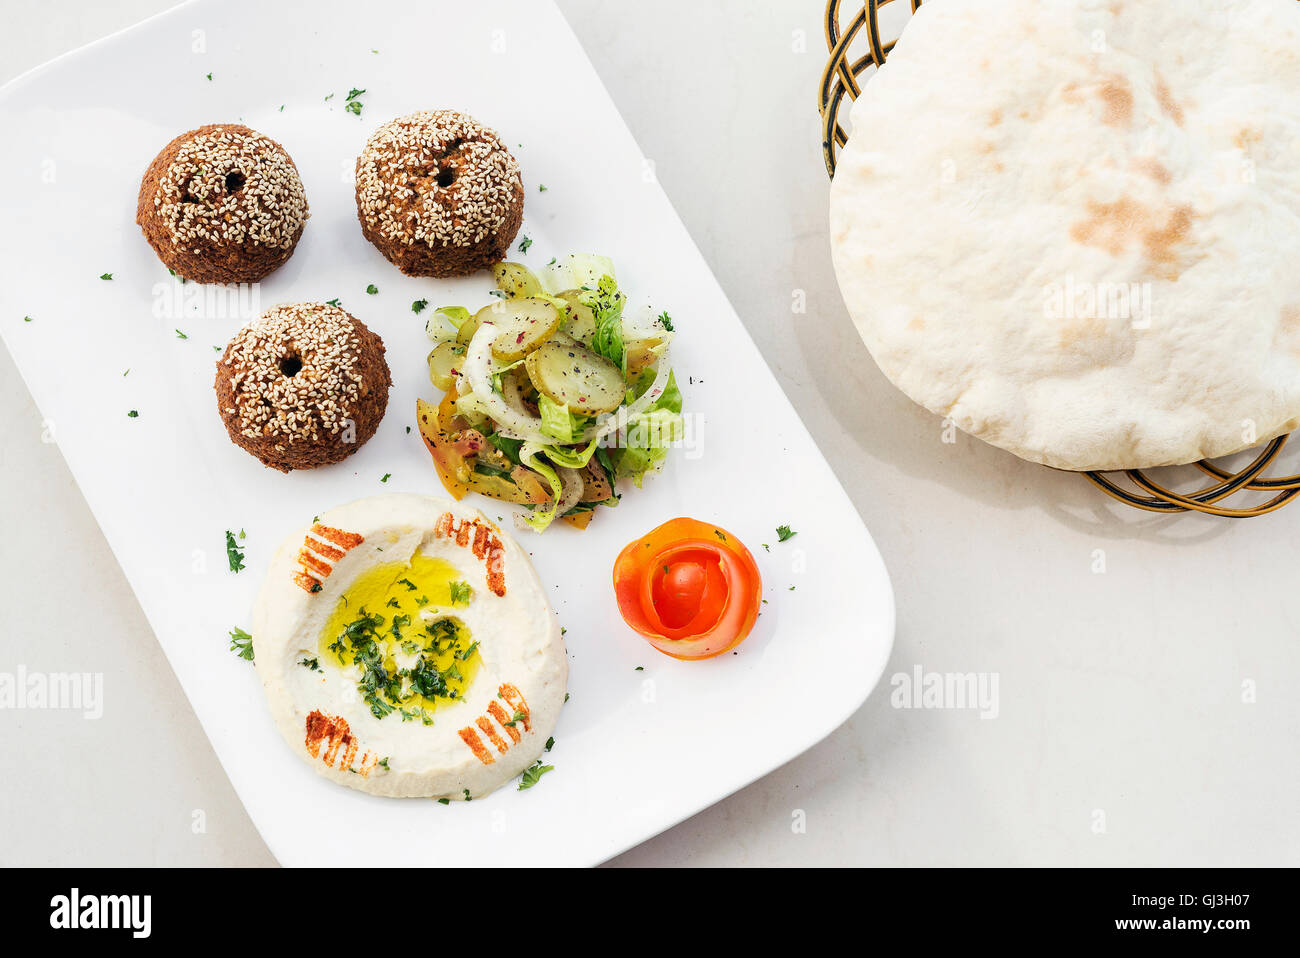 Falafel hummus houmus starter snack ristoranti mediorientali mezze platter Foto Stock